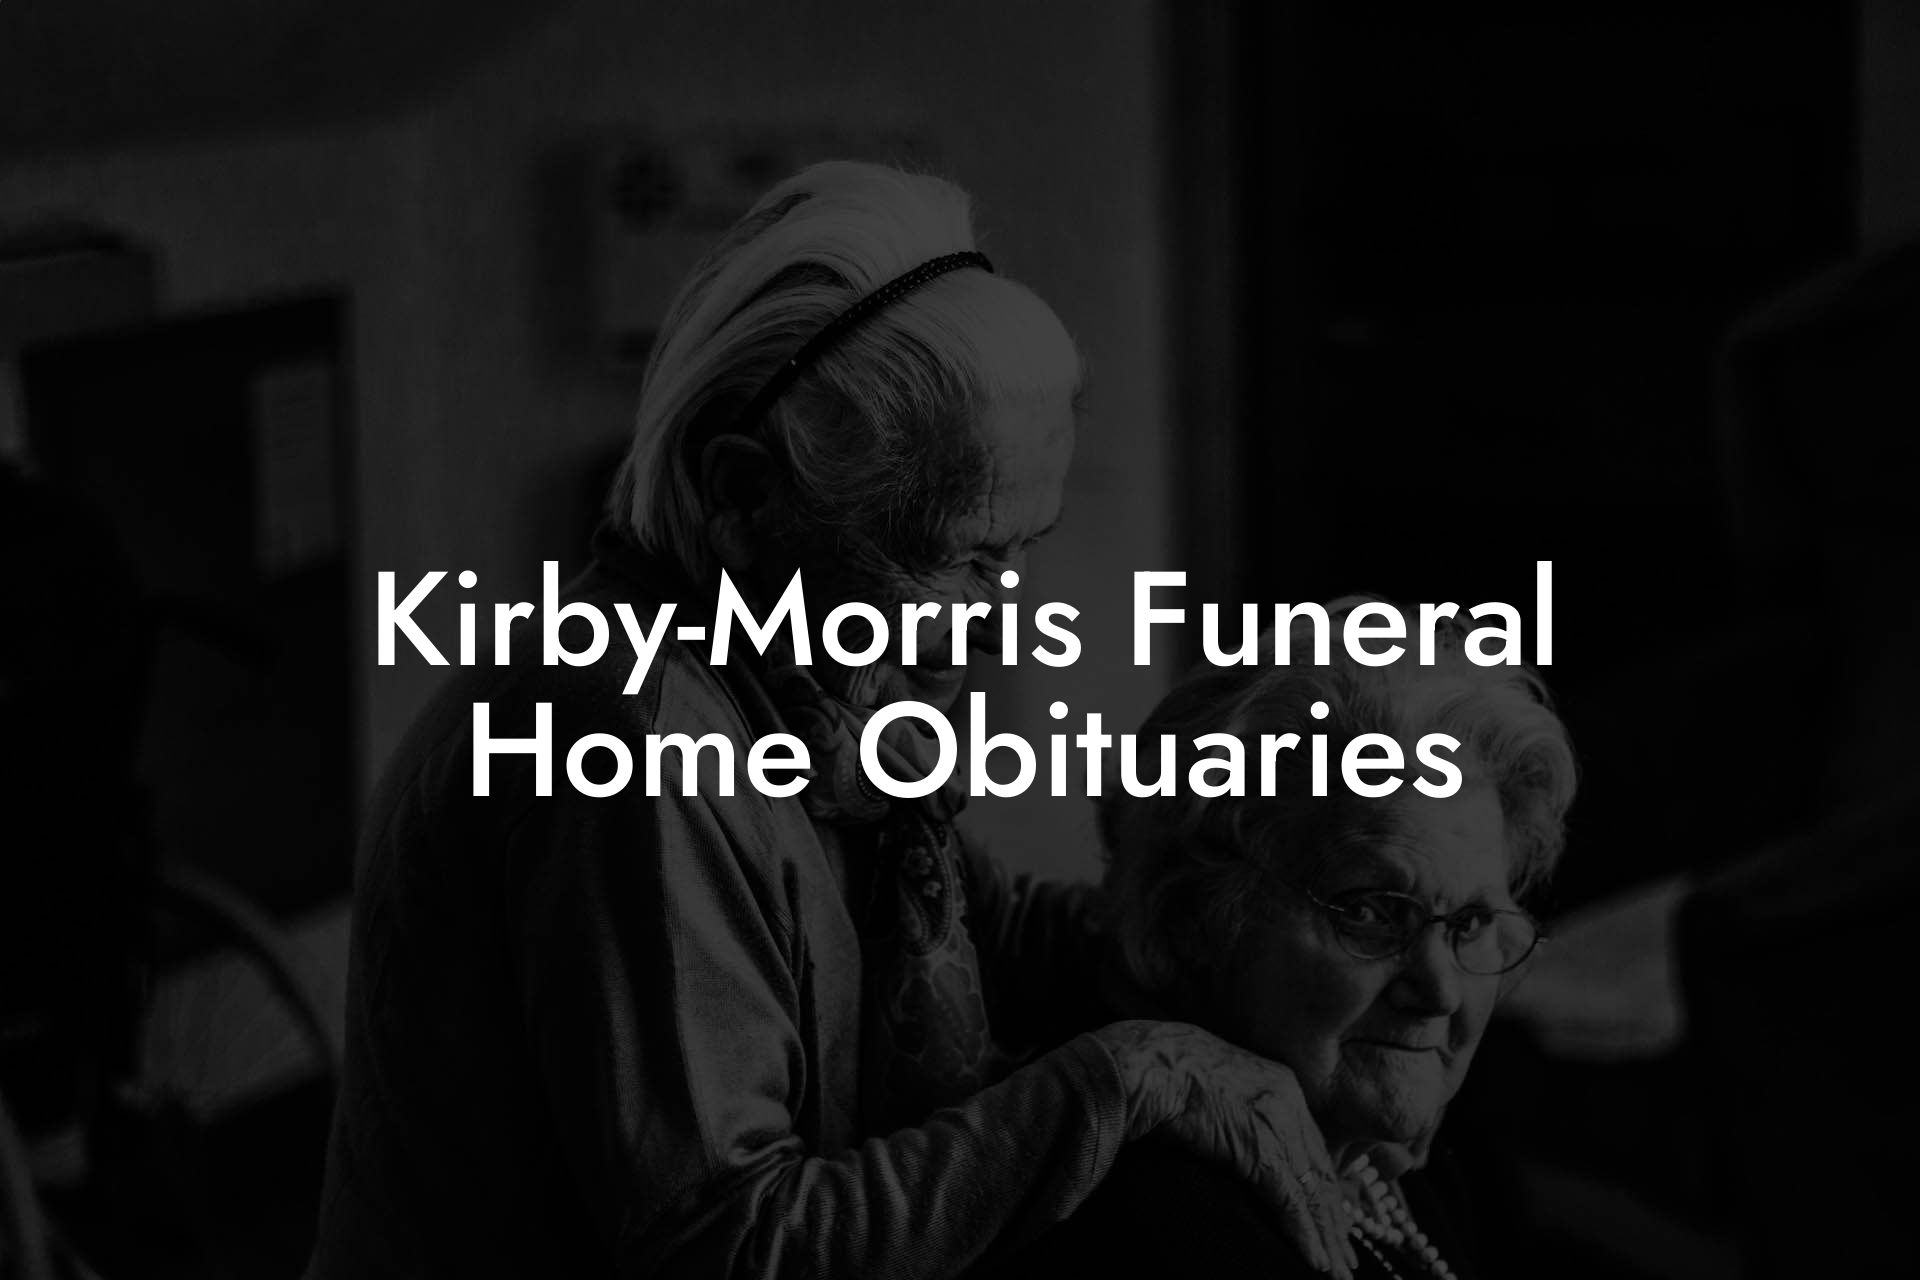 Kirby-Morris Funeral Home Obituaries